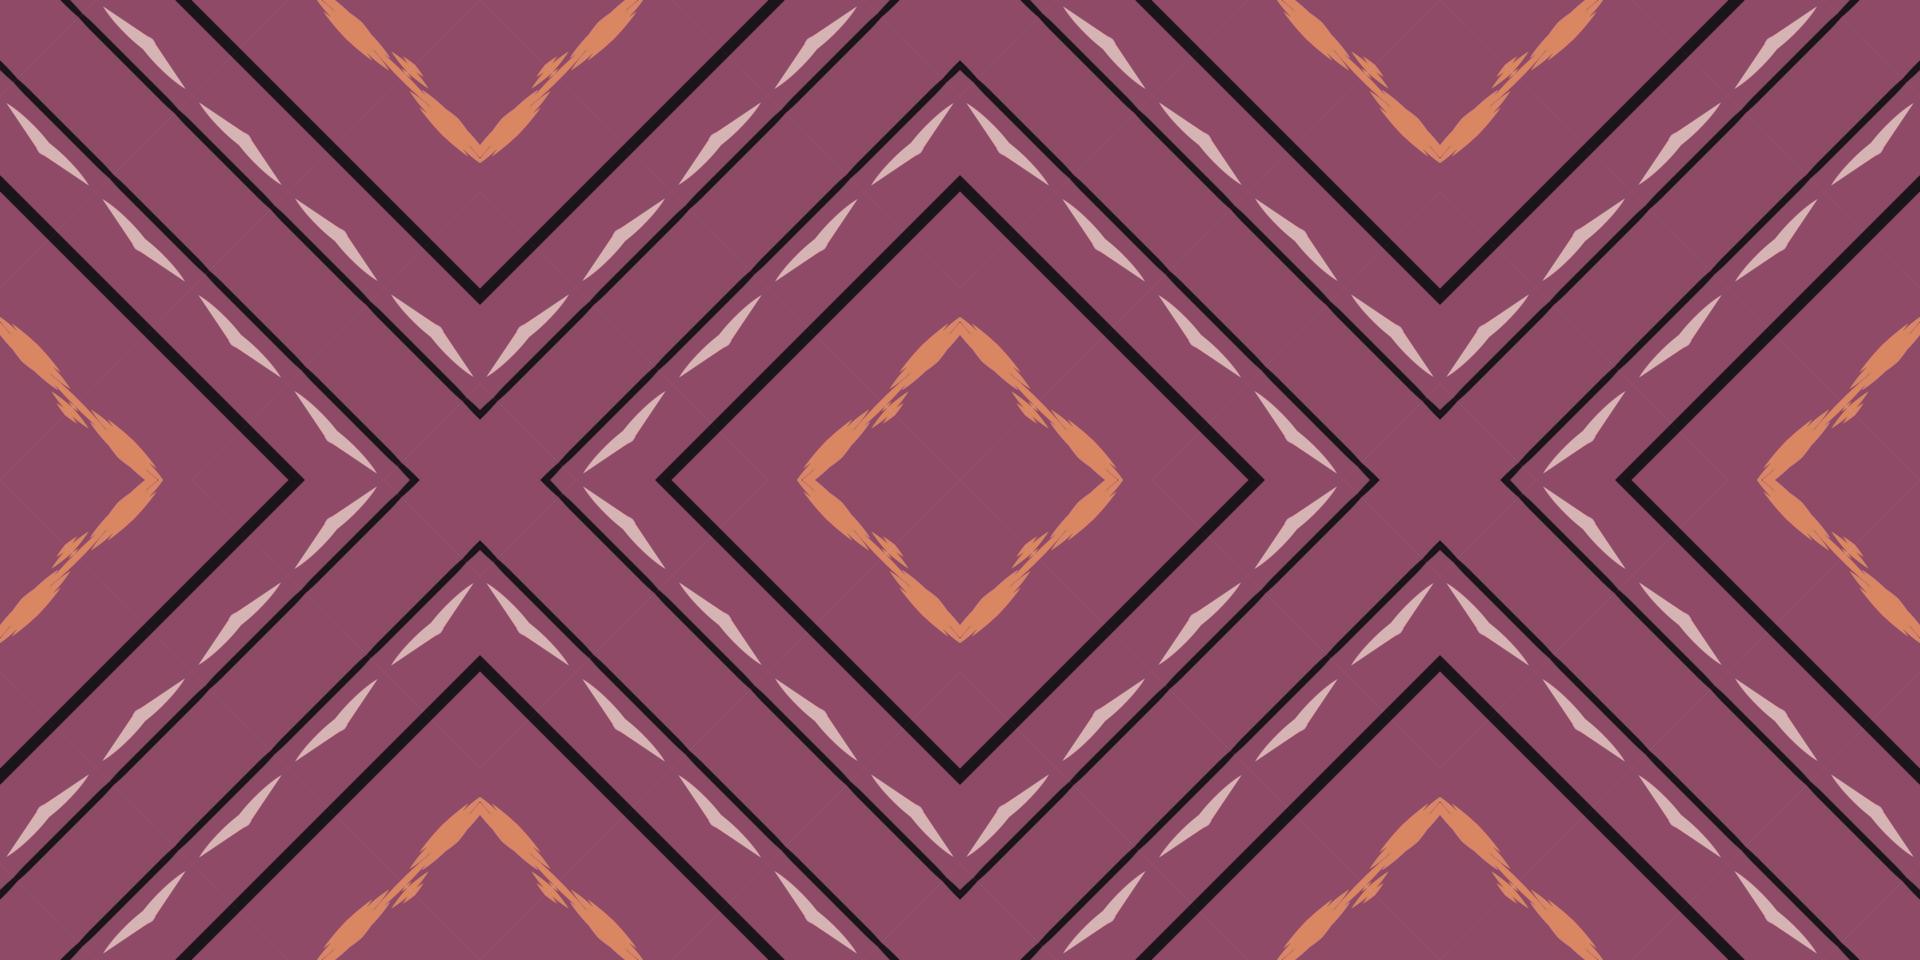 motivo ikat tela batik textil patrón sin costuras diseño vectorial digital para imprimir saree kurti borde de tela símbolos de pincel muestras elegantes vector